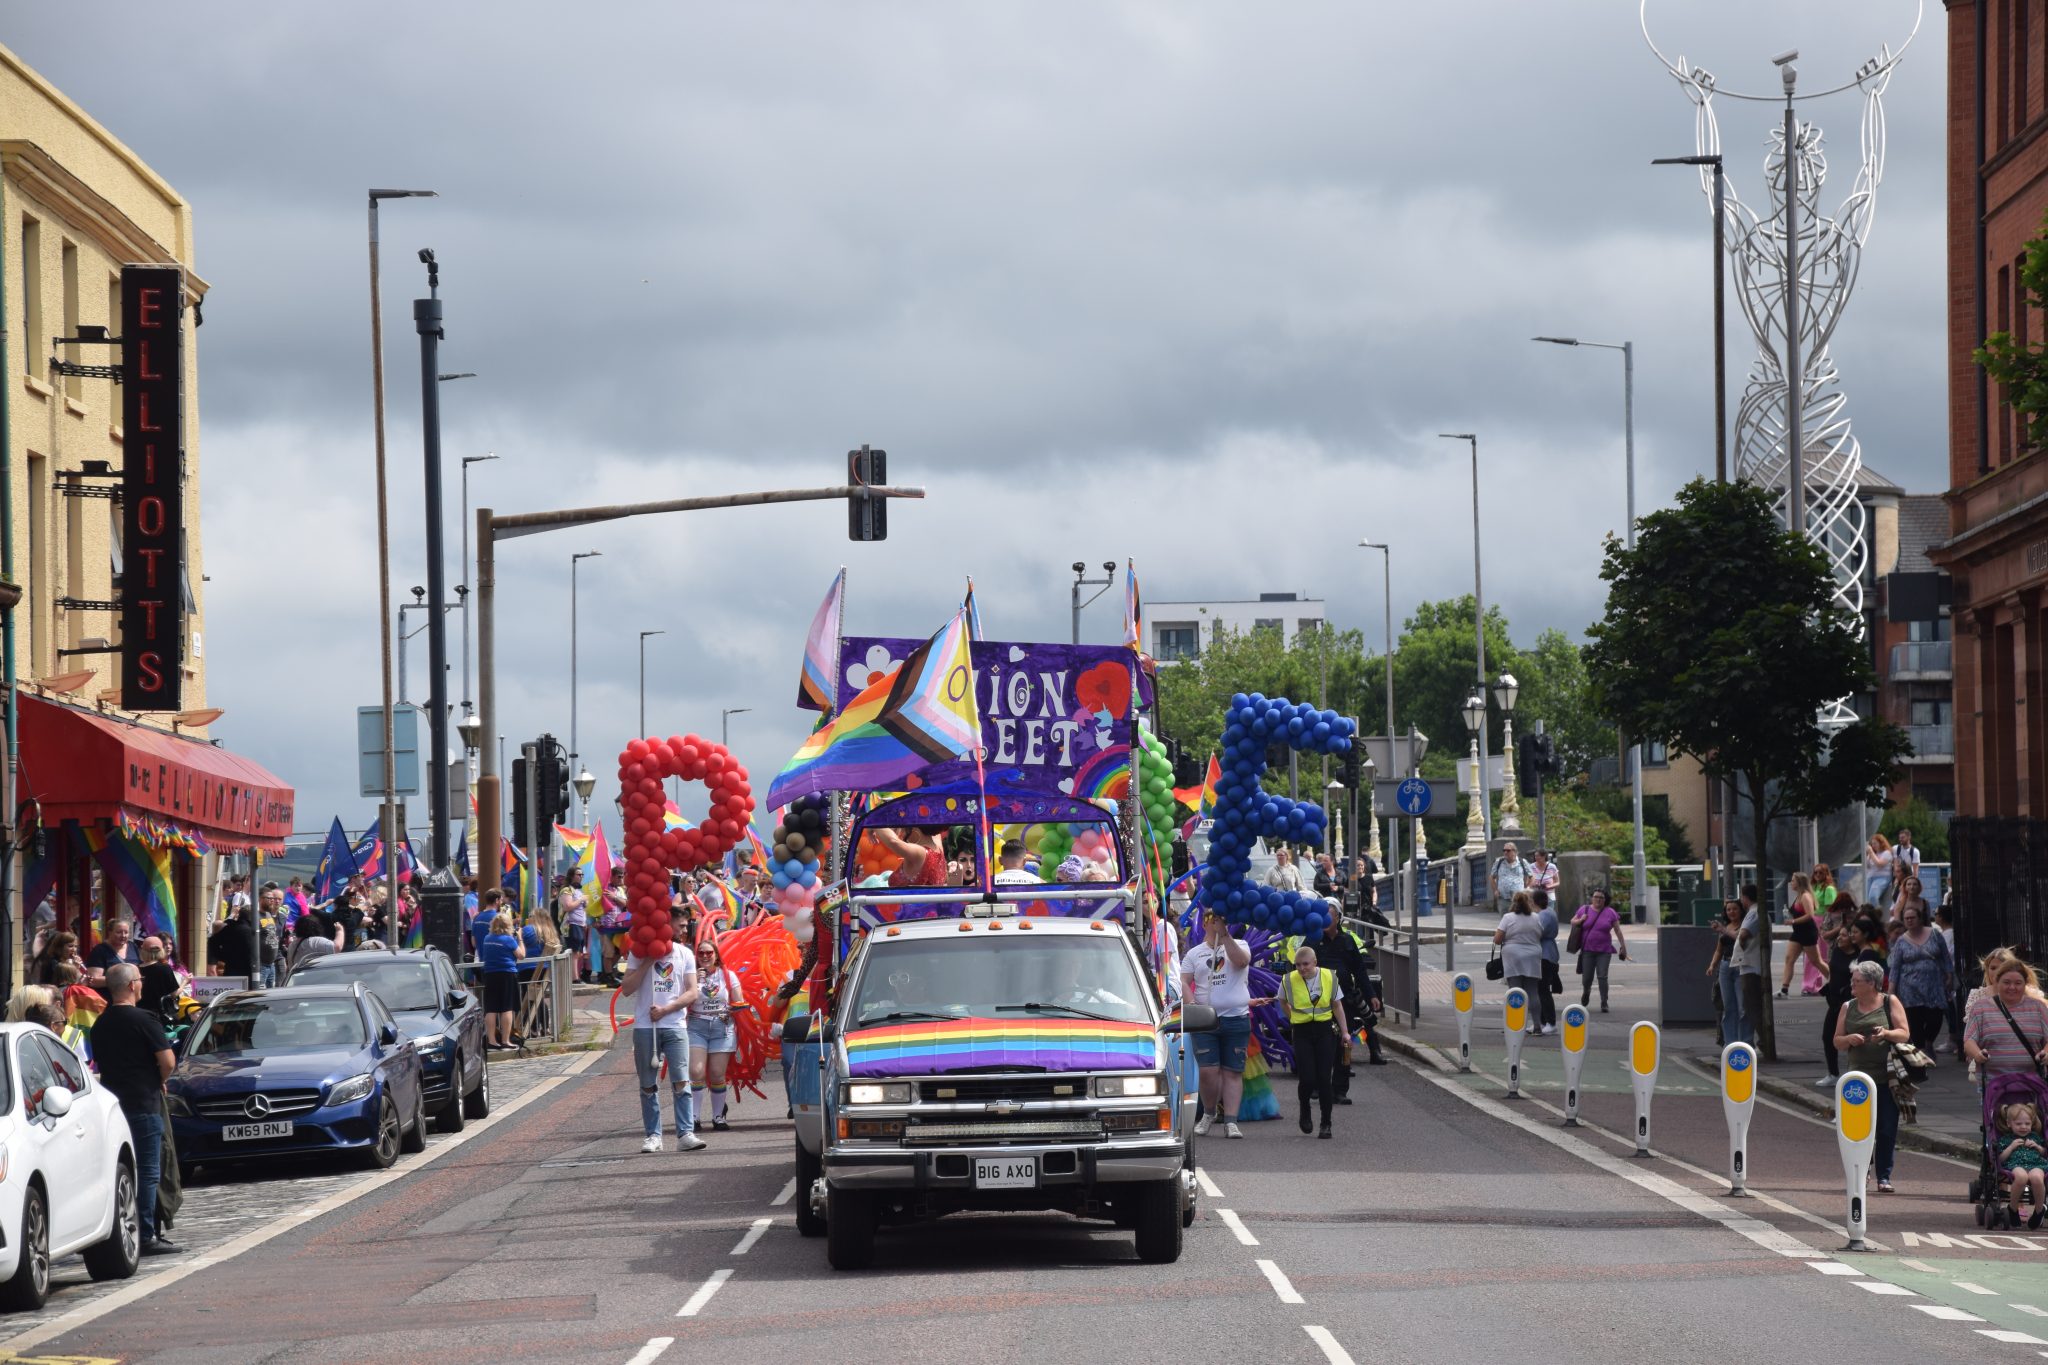 Belfast Pride Diverse, Equal, Proud